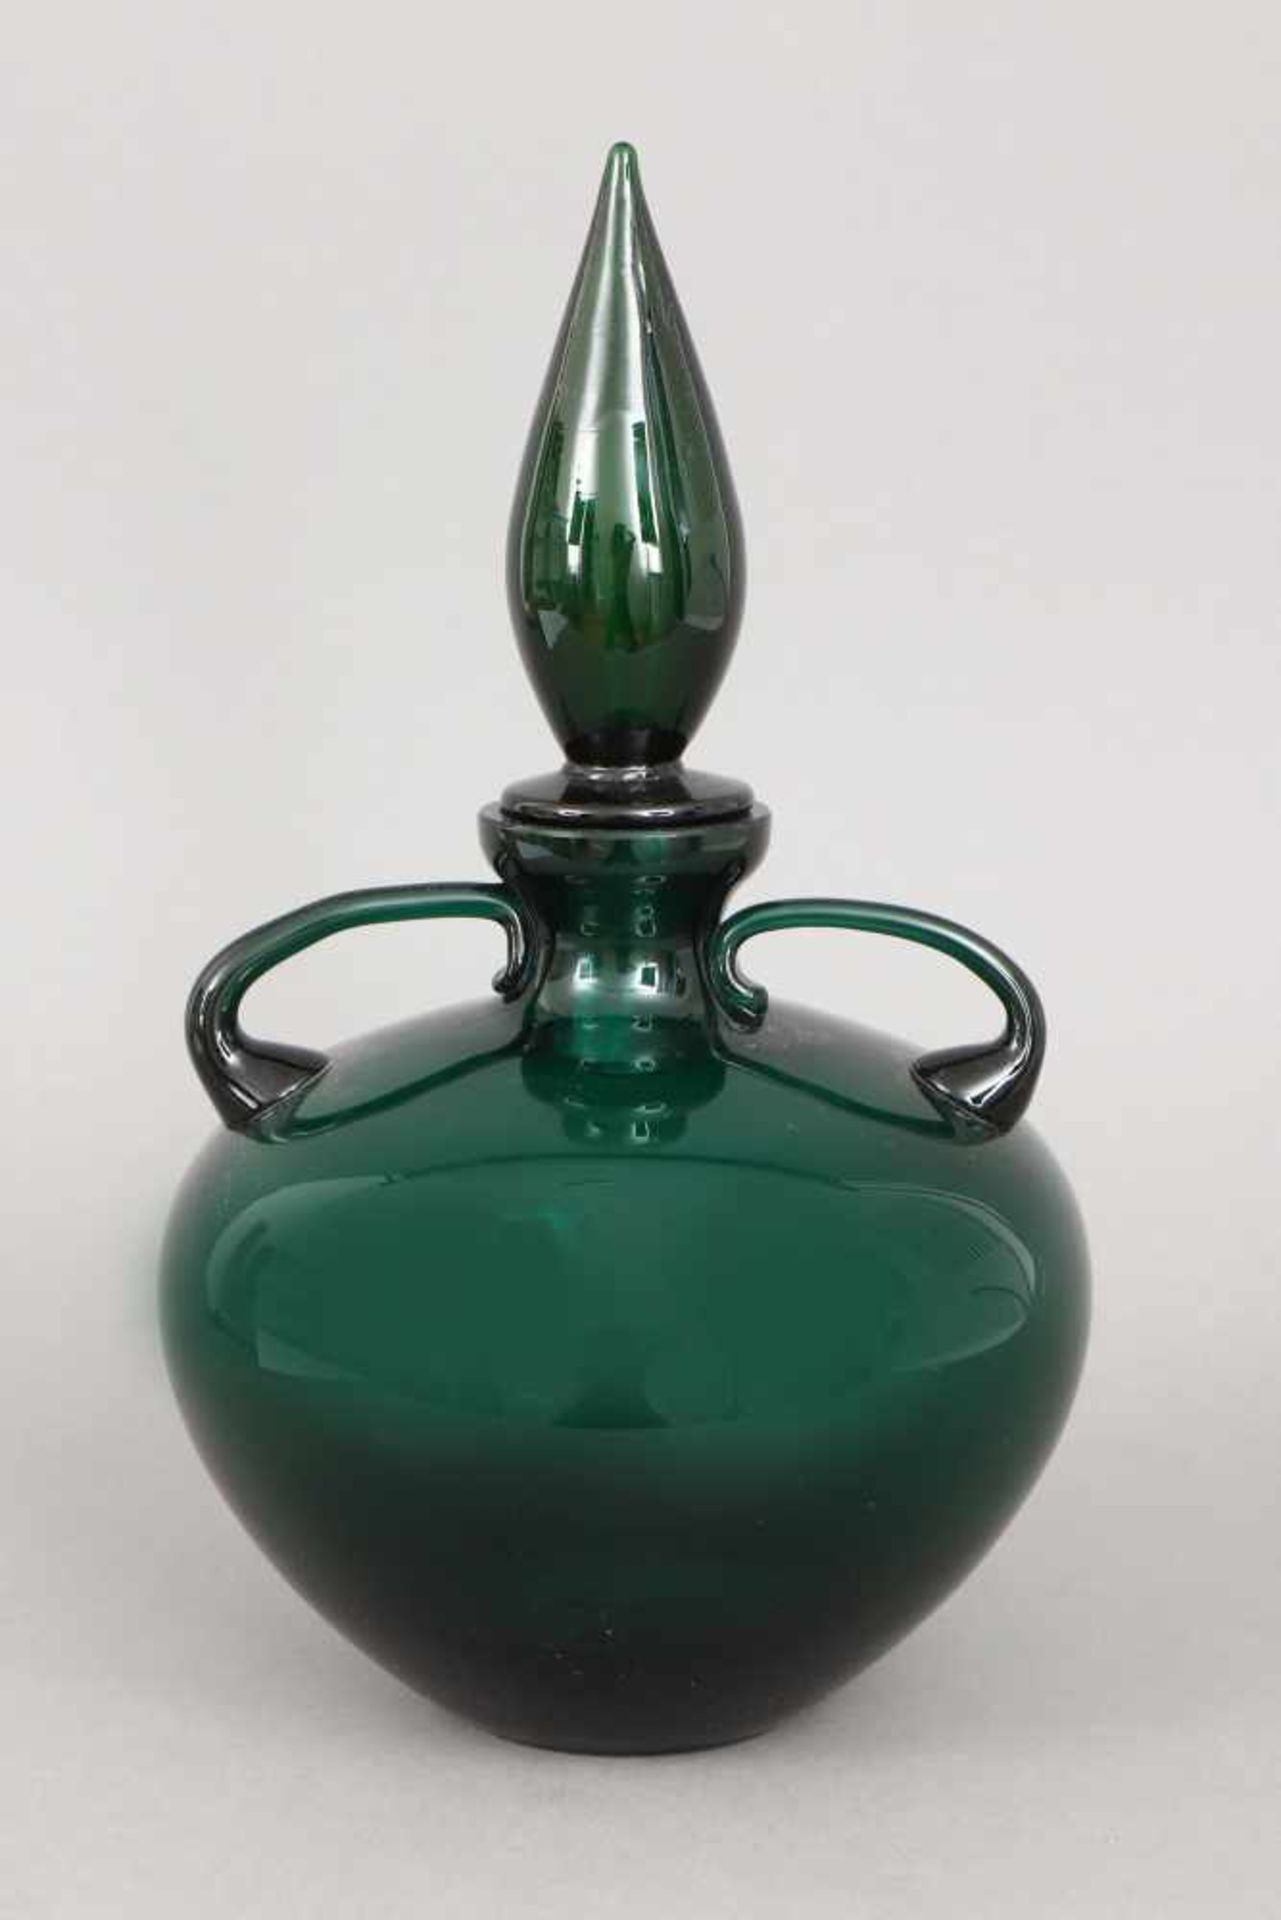 Glaskaraffe mit zapfenförmigem Stopfenunbekannte Manufaktur, um 1960, grünes Glas, kugelförmiger